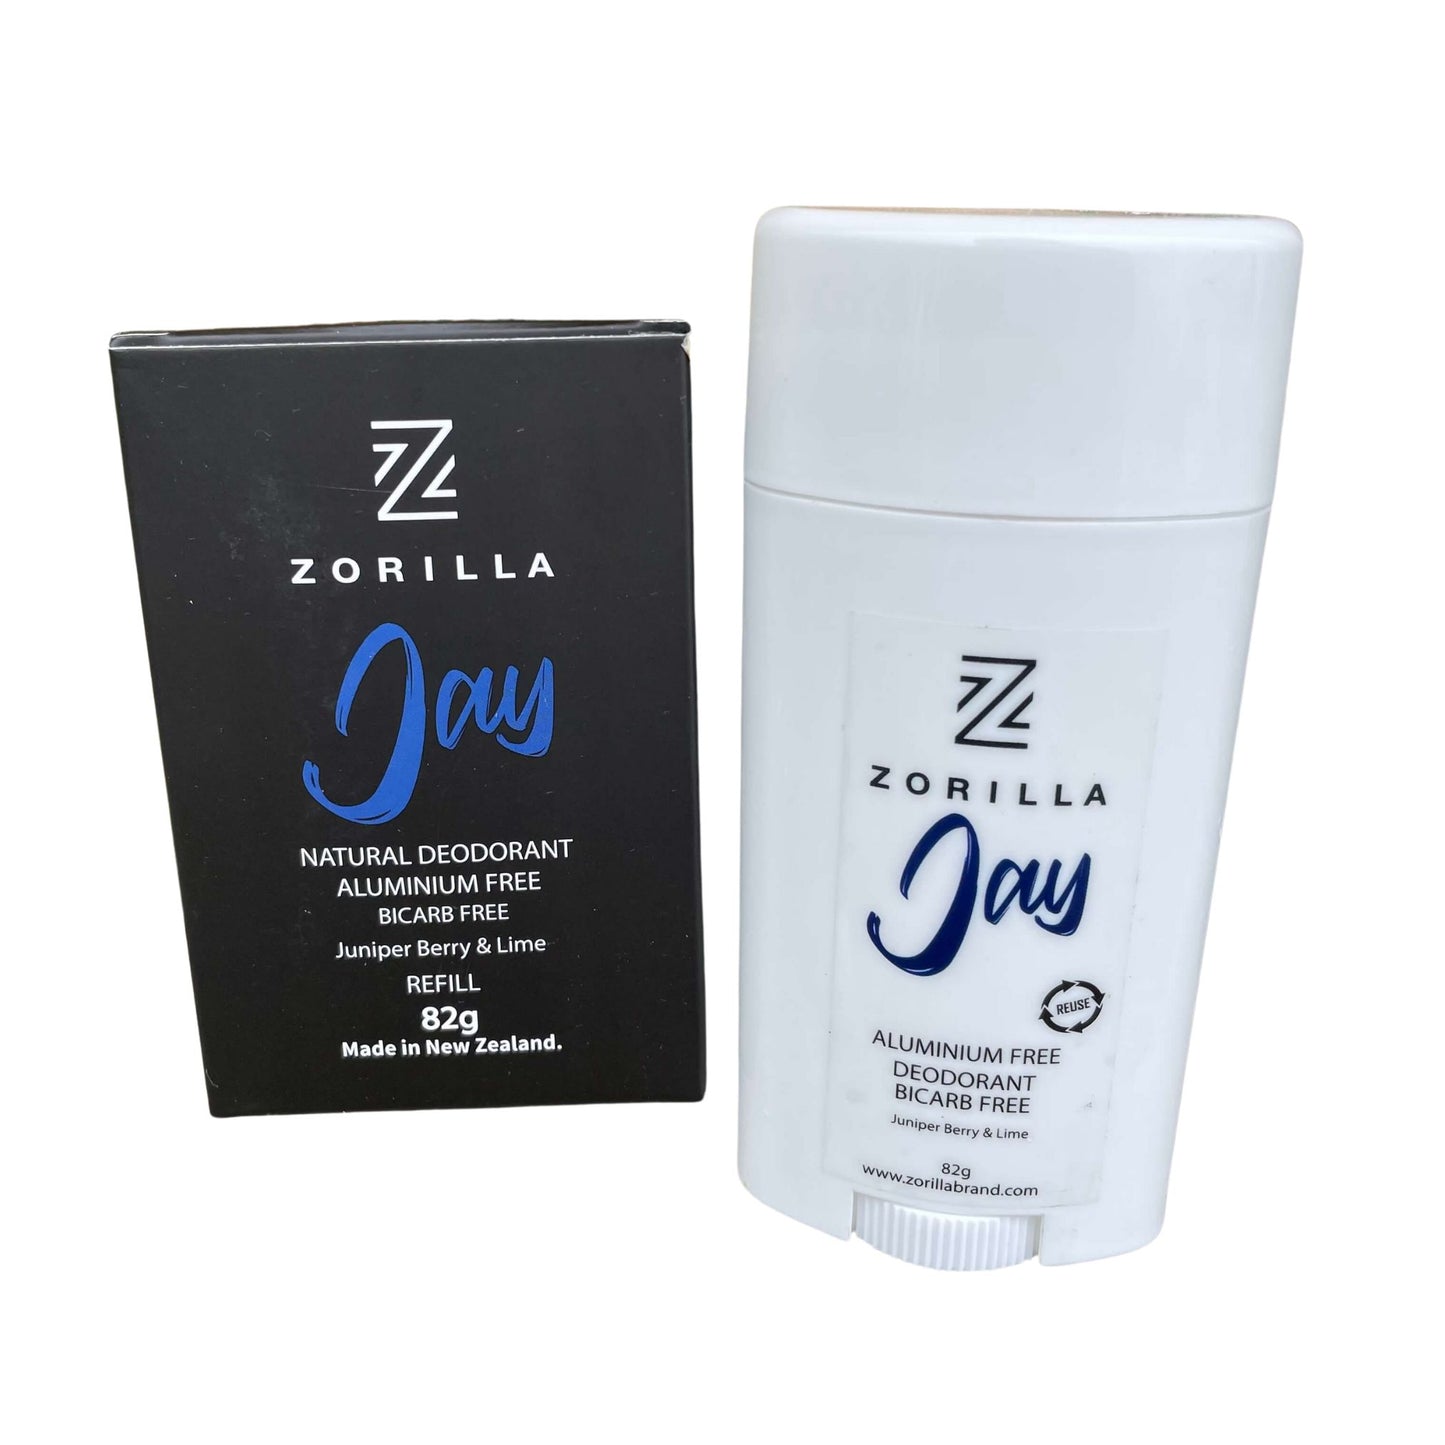 Zorilla Mens natural deodorant tube and refill pack